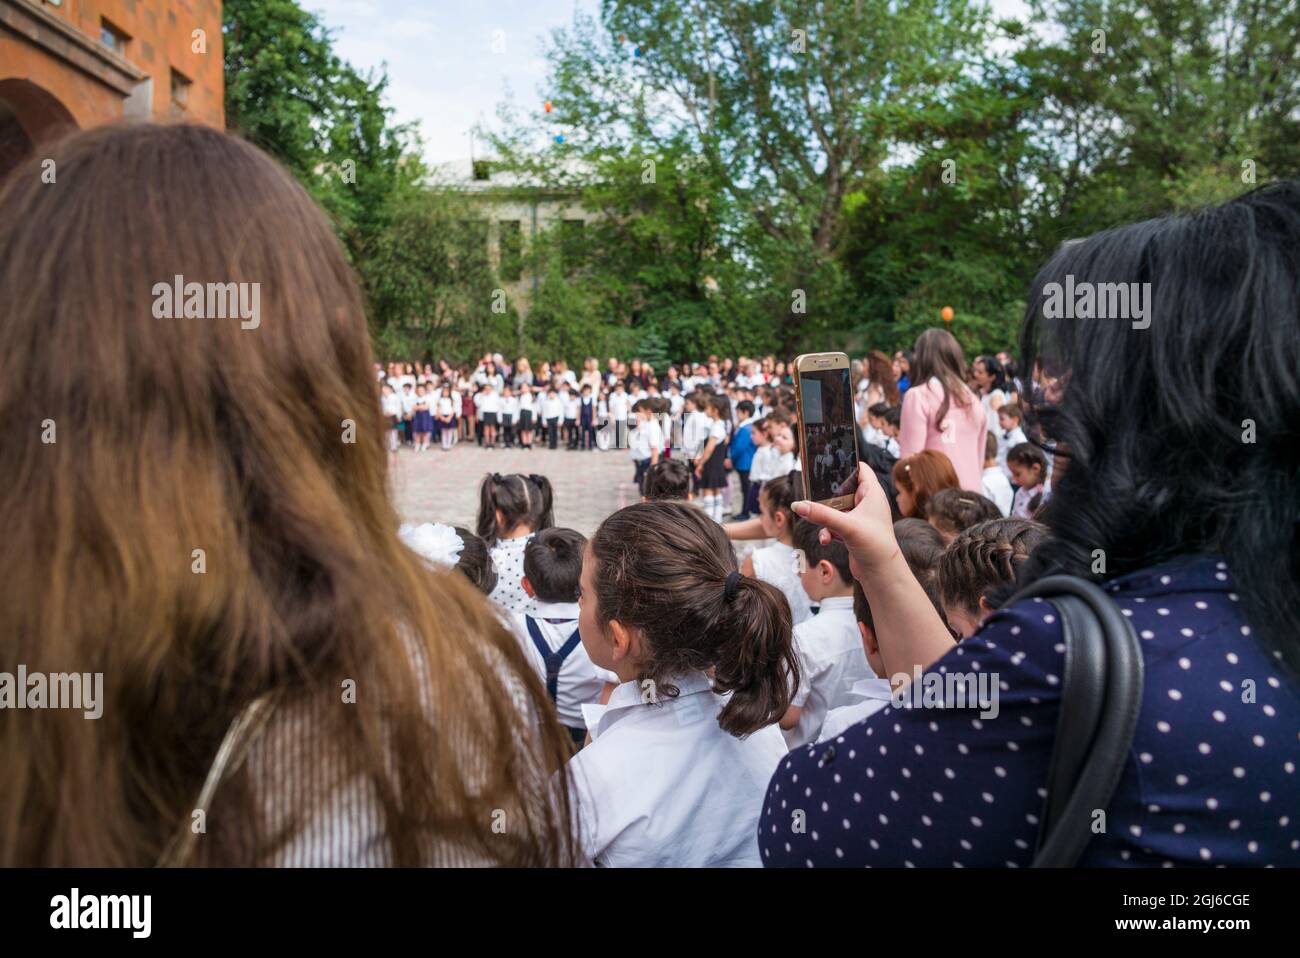 Armenia, Yerevan. Last bell or last day of school ceremonies at public school. Stock Photo